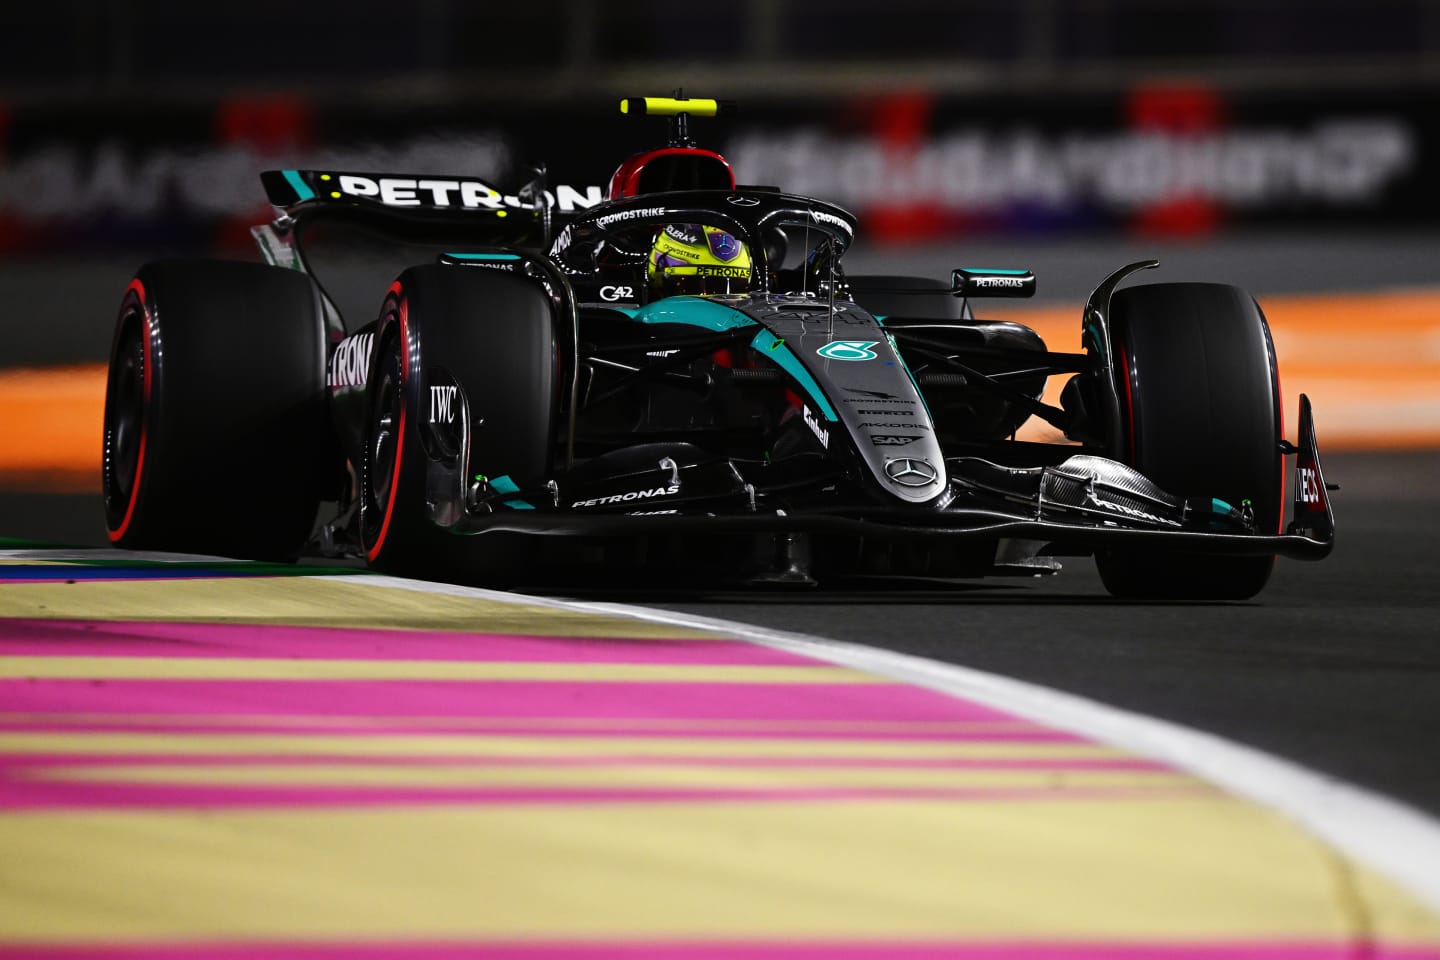 JEDDAH, SAUDI ARABIA - MARCH 08: Lewis Hamilton of Great Britain driving the (44) Mercedes AMG